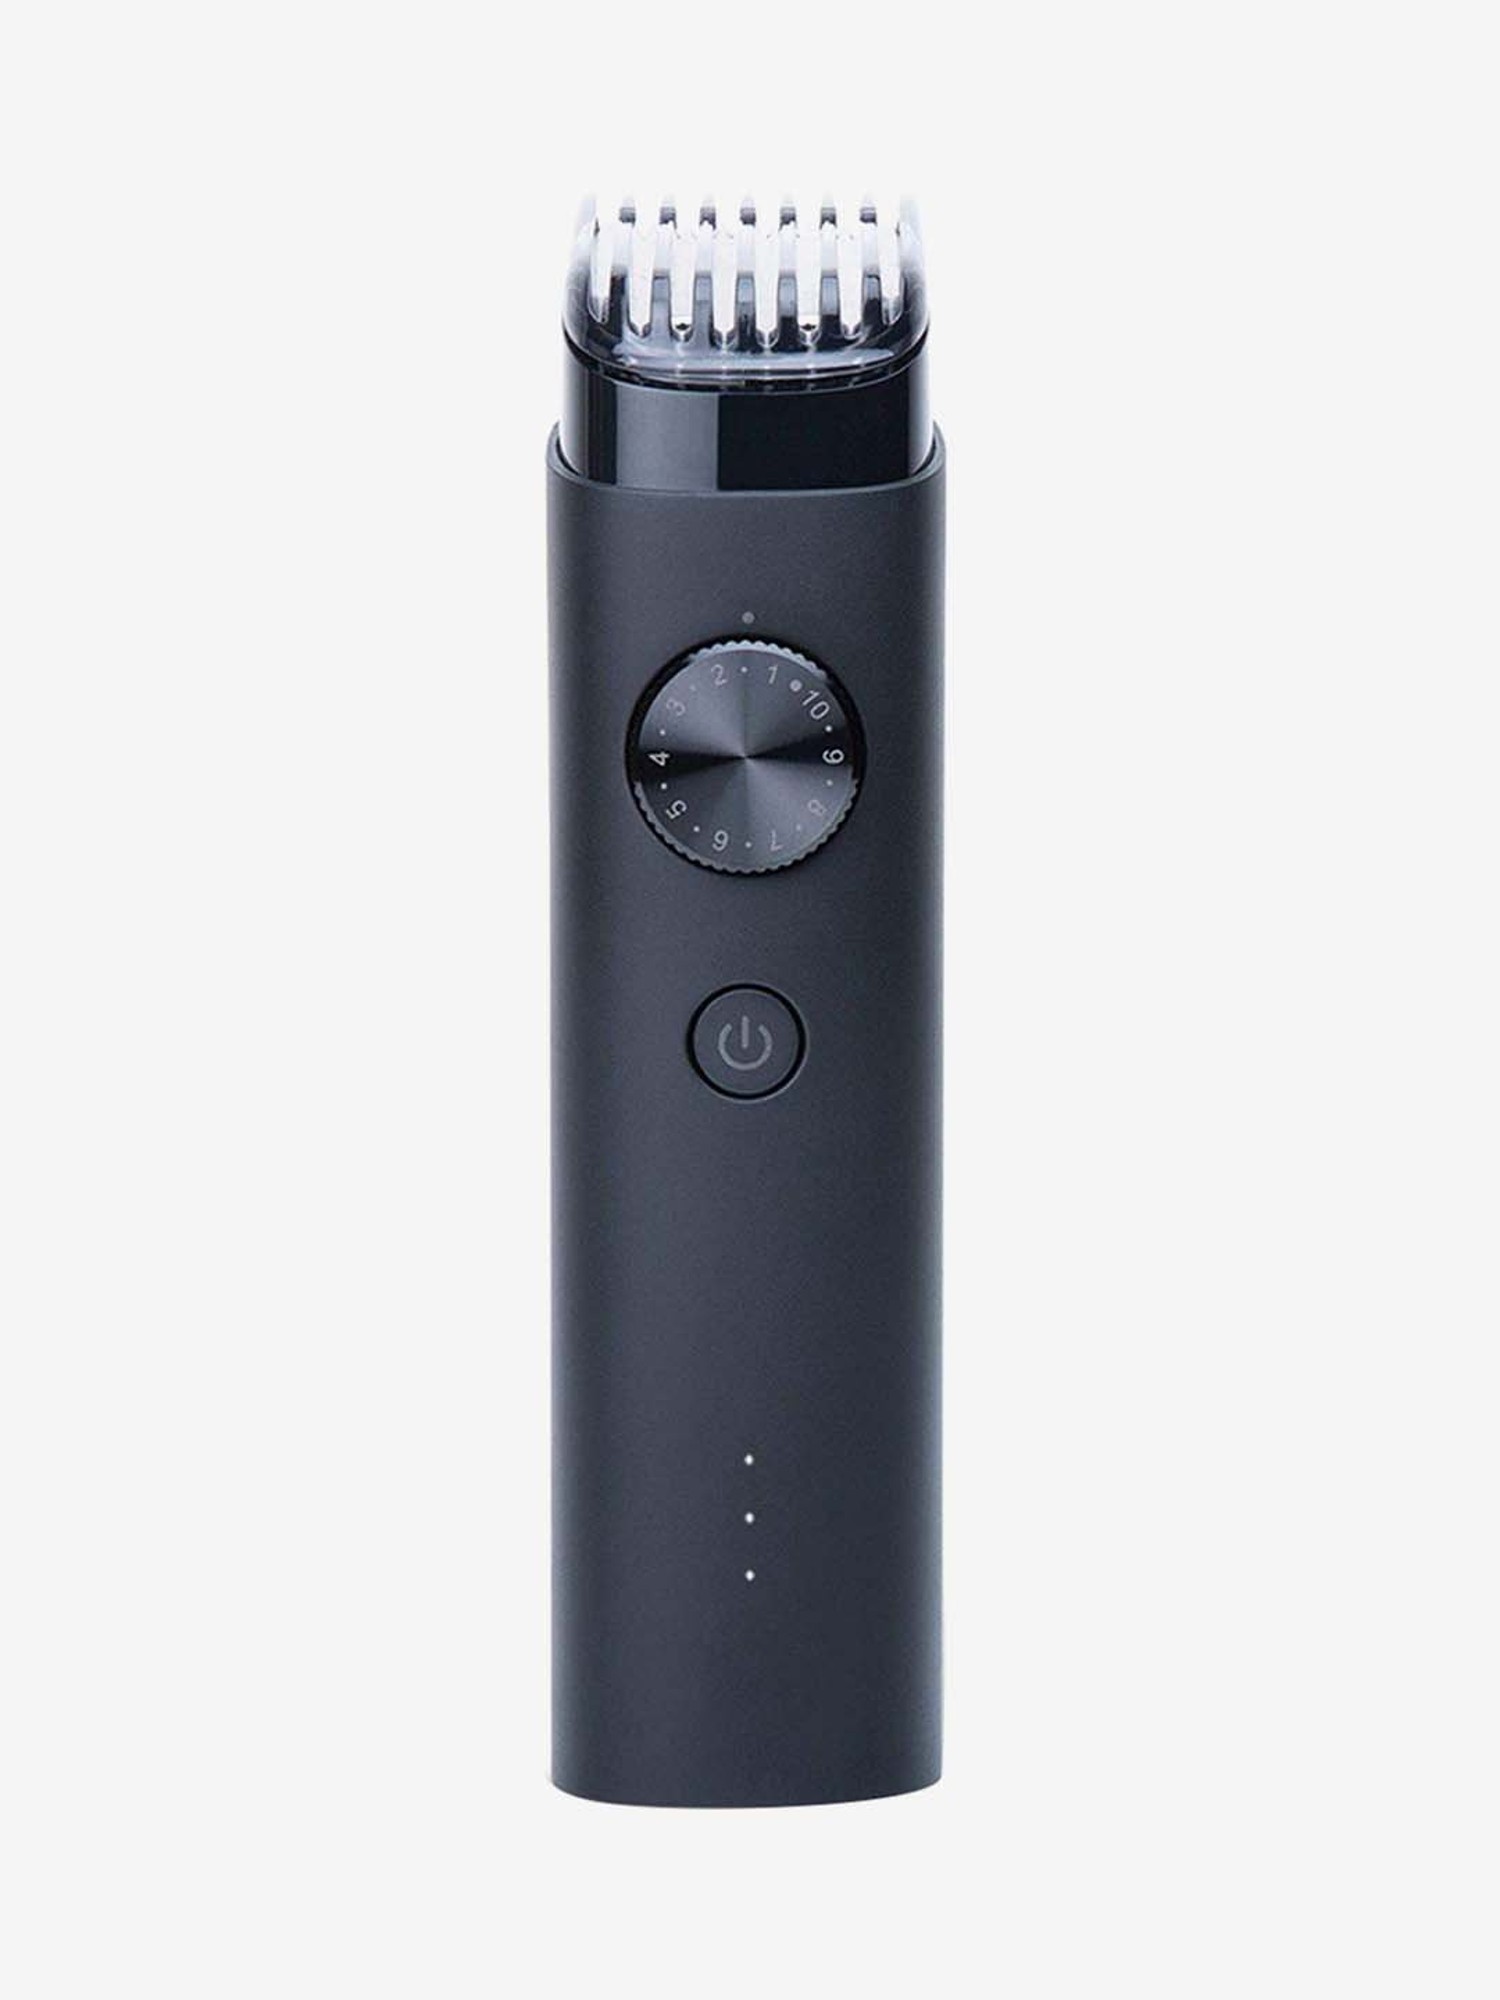 philips hair beard trimmer